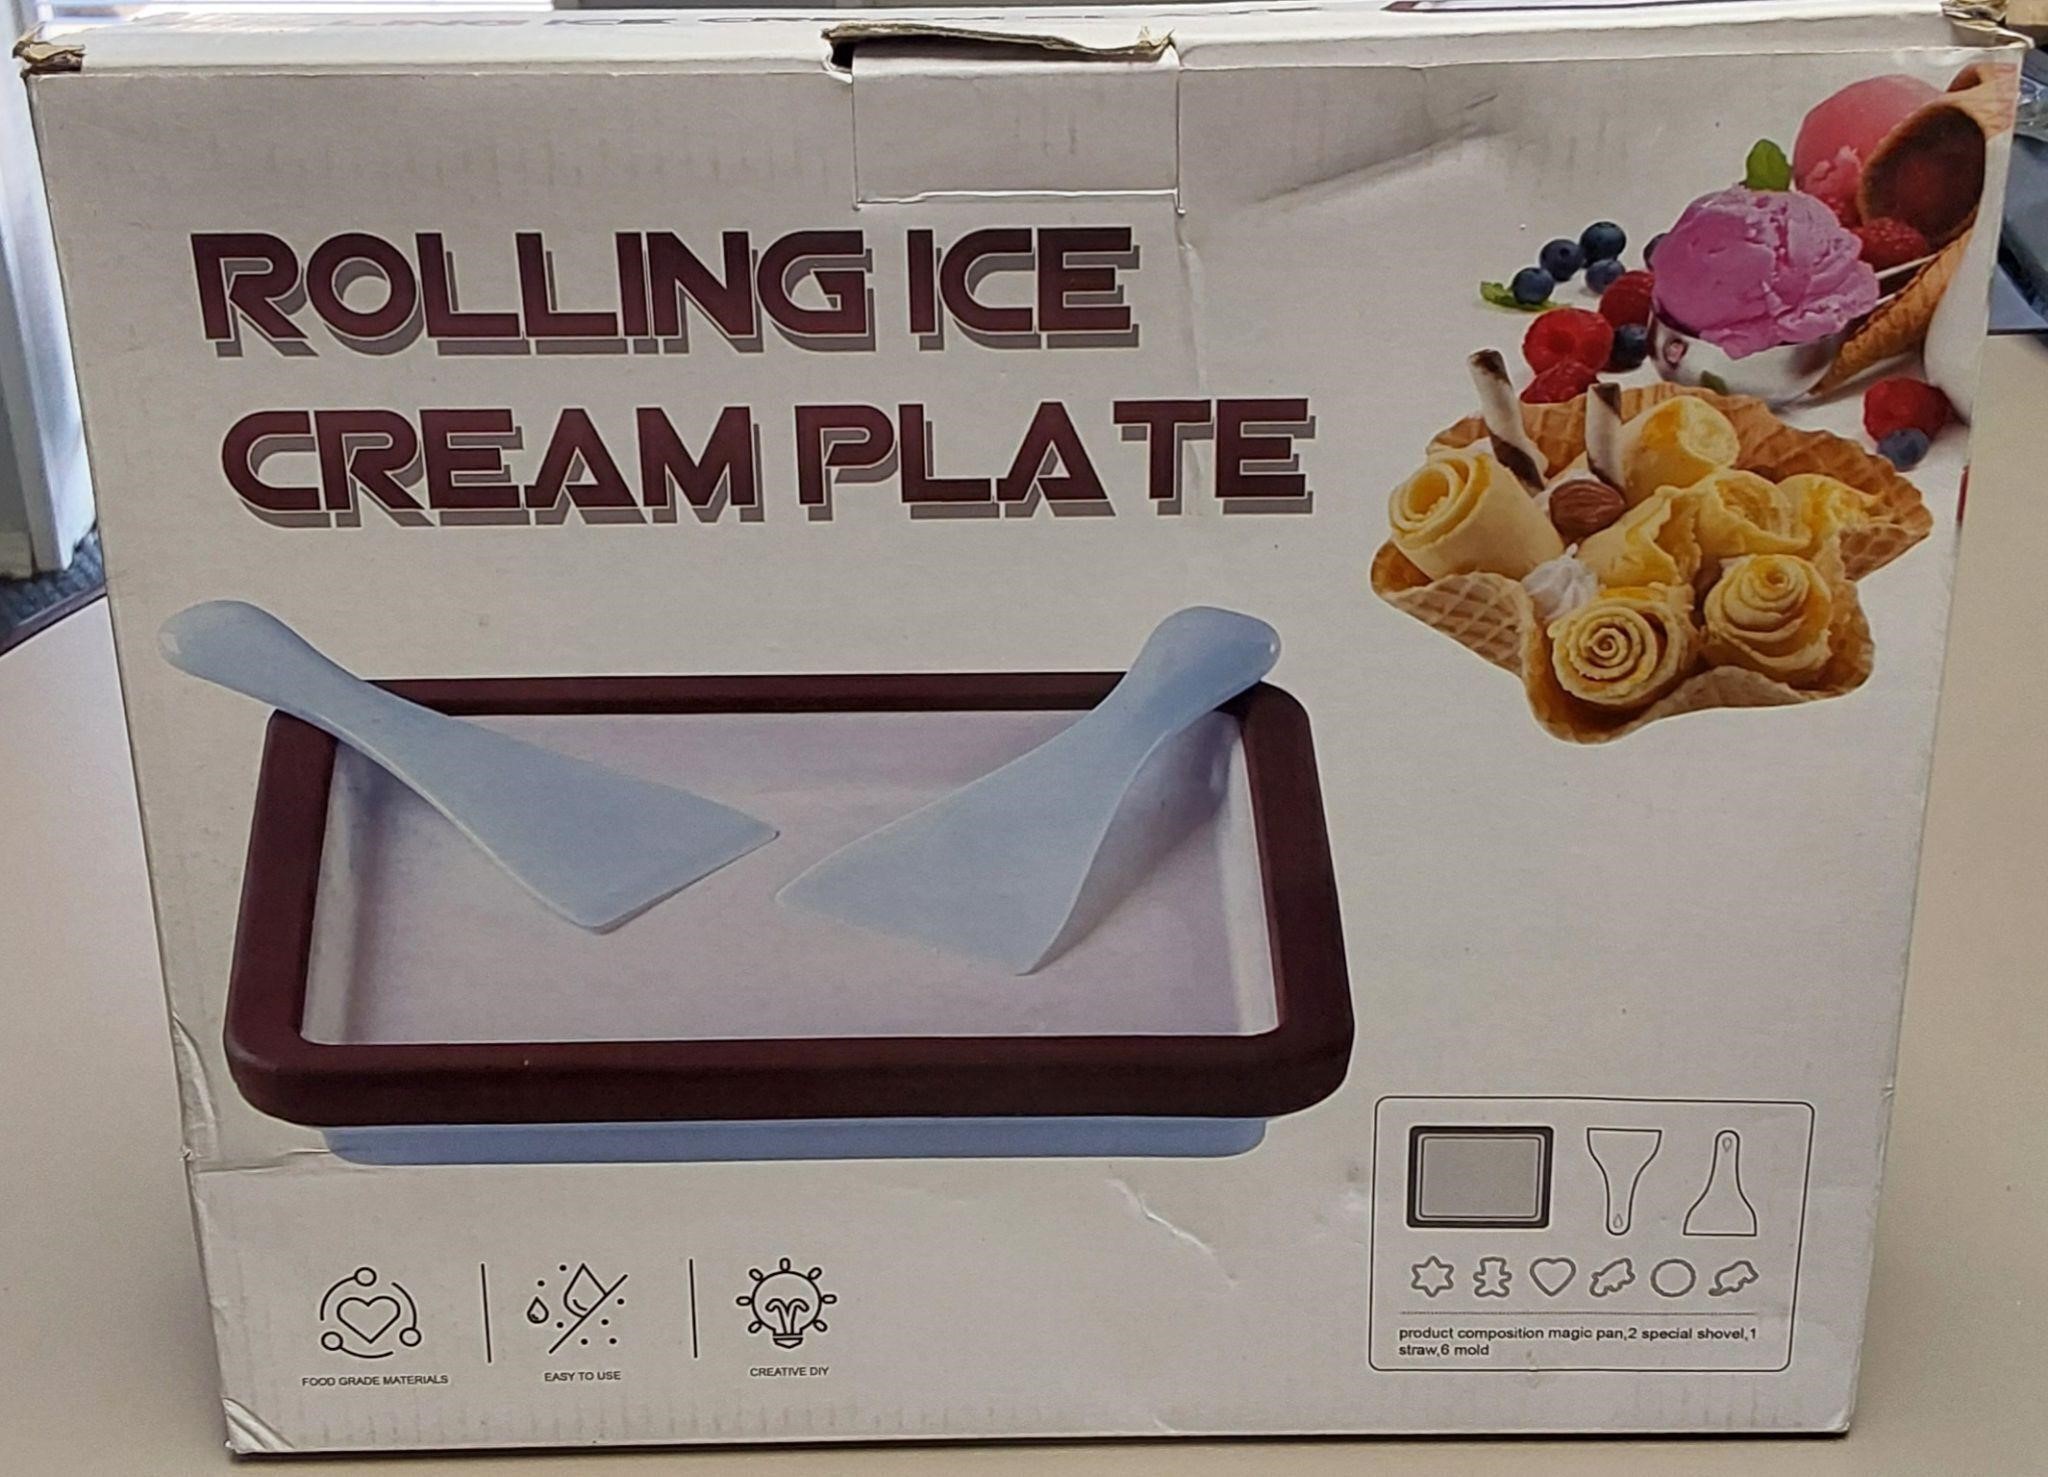 Rolling Ice Cream Plate